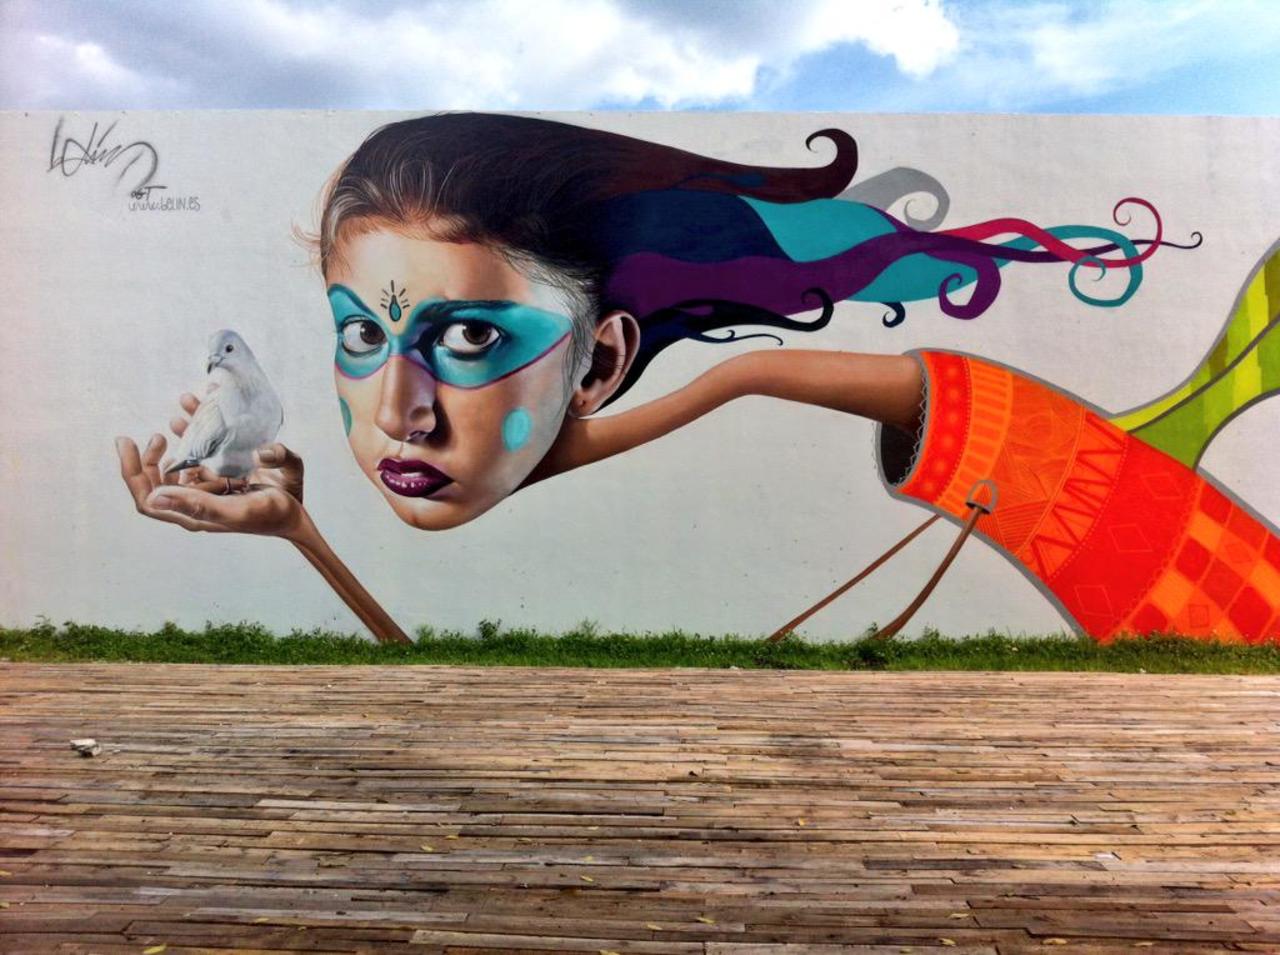 RT @Pitchuskita: Belin 
Miami
#streetart #art #graffiti #mural http://t.co/uwn7In6Fdy